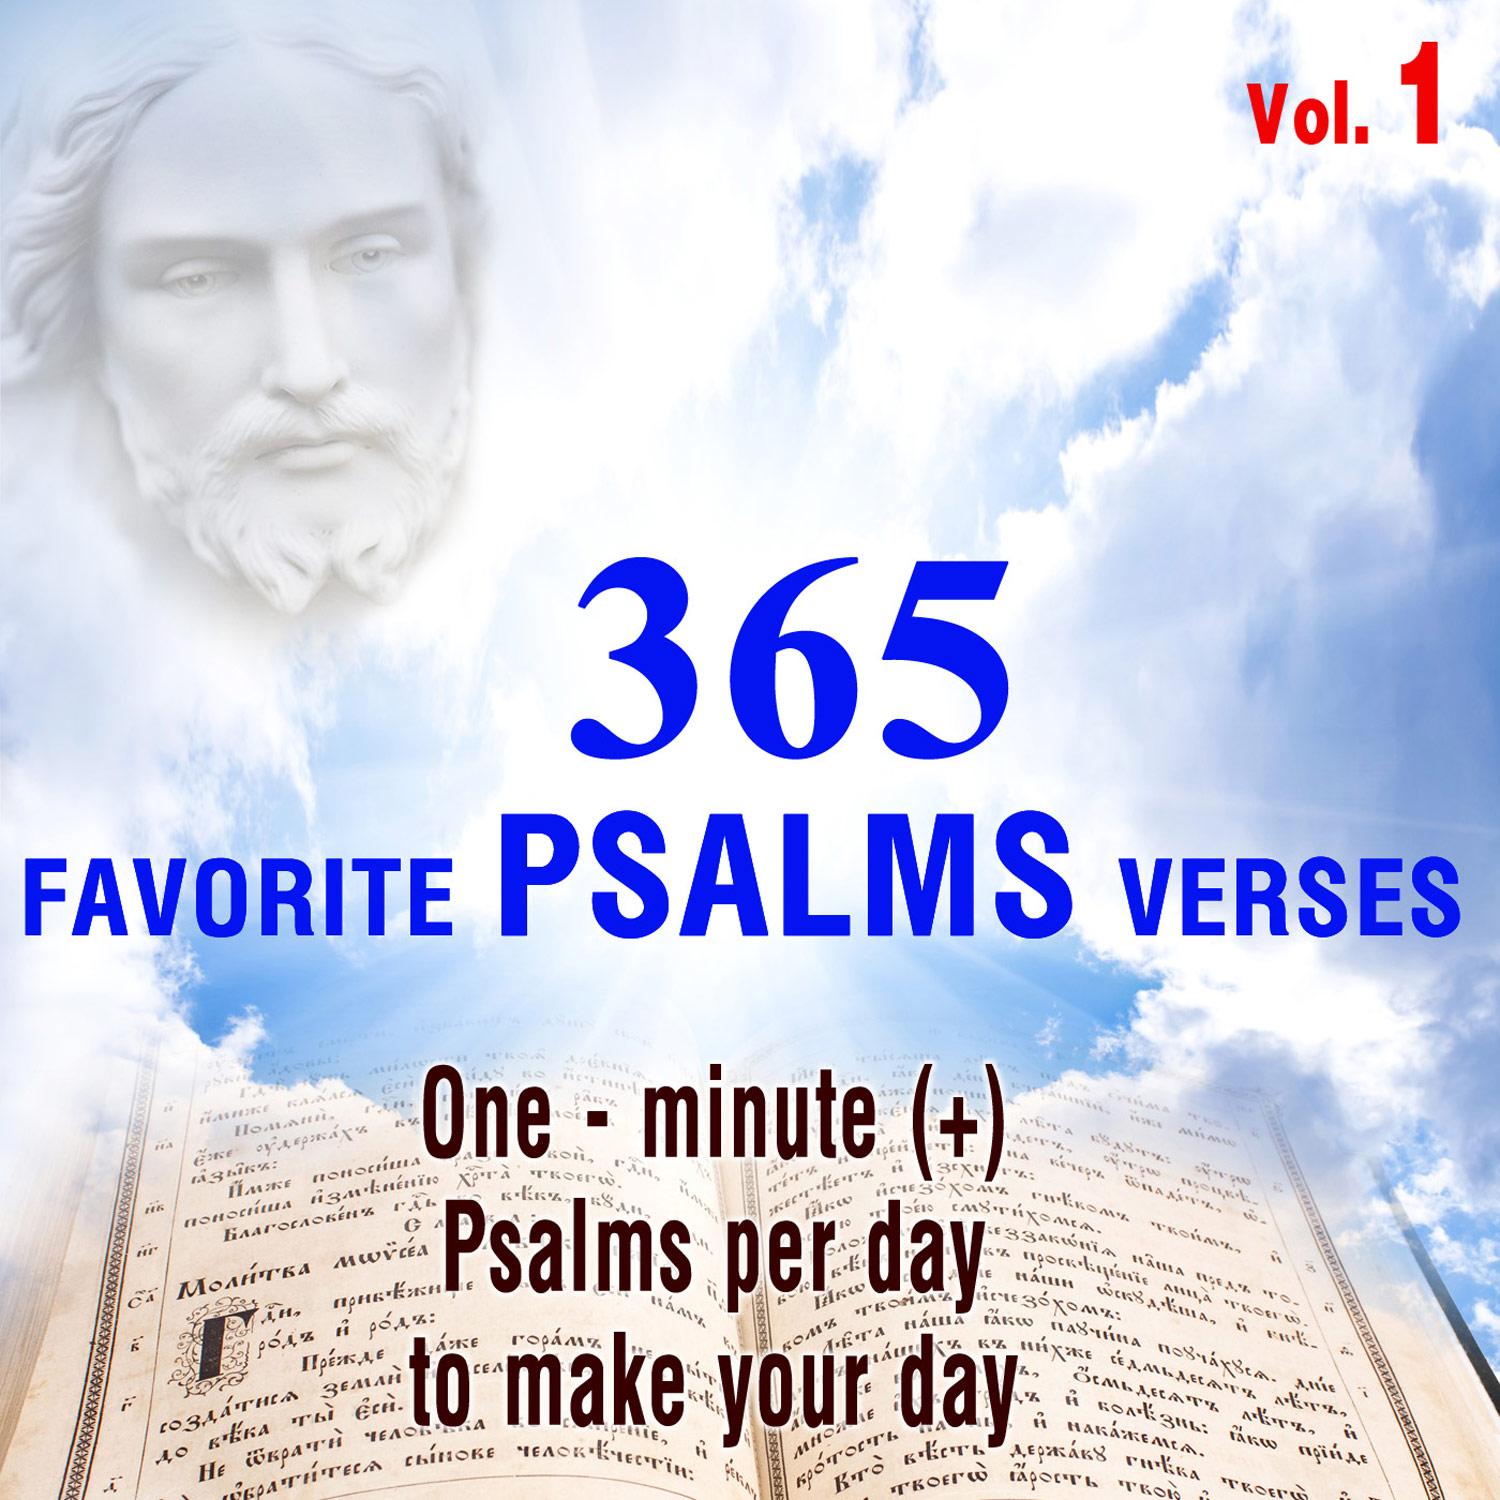 Psalms No. 136